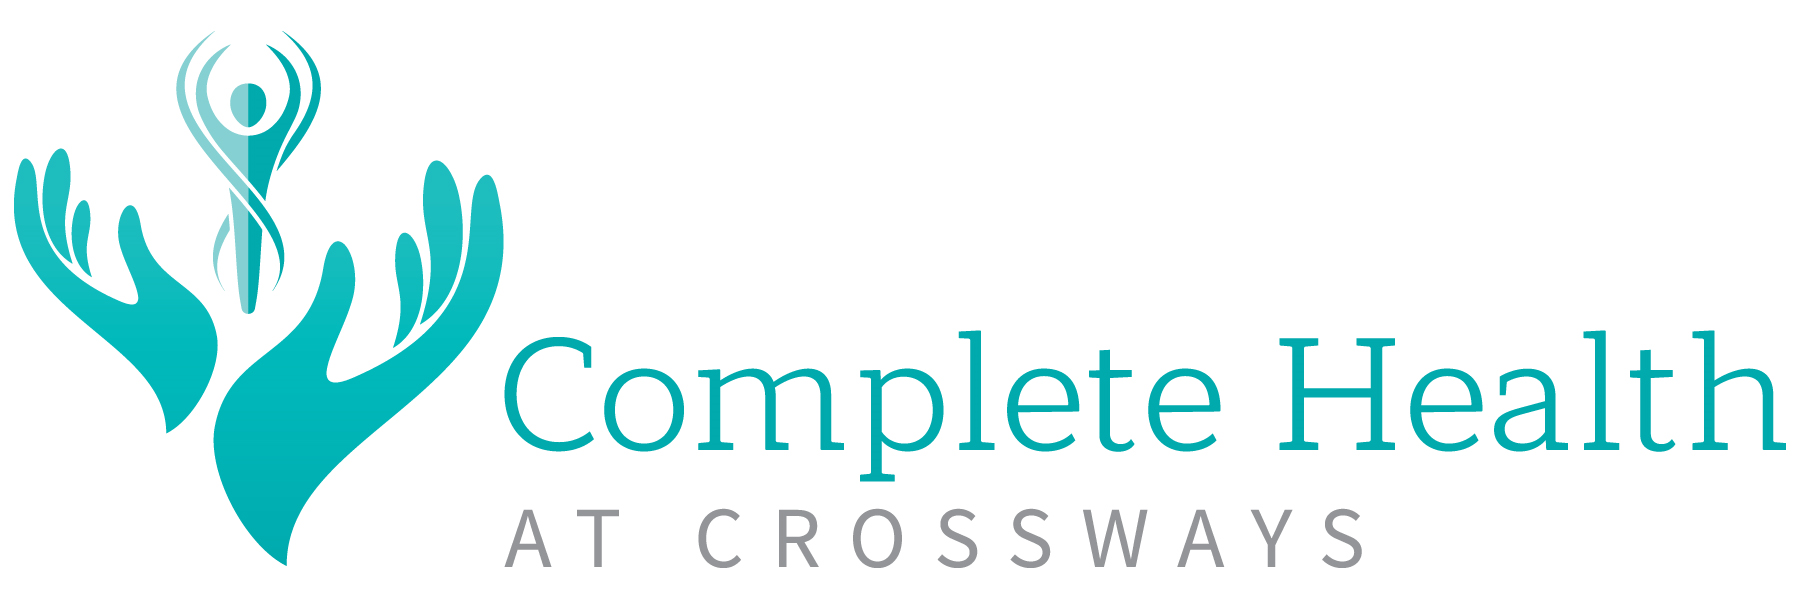 Complete Health at Crossways Logo